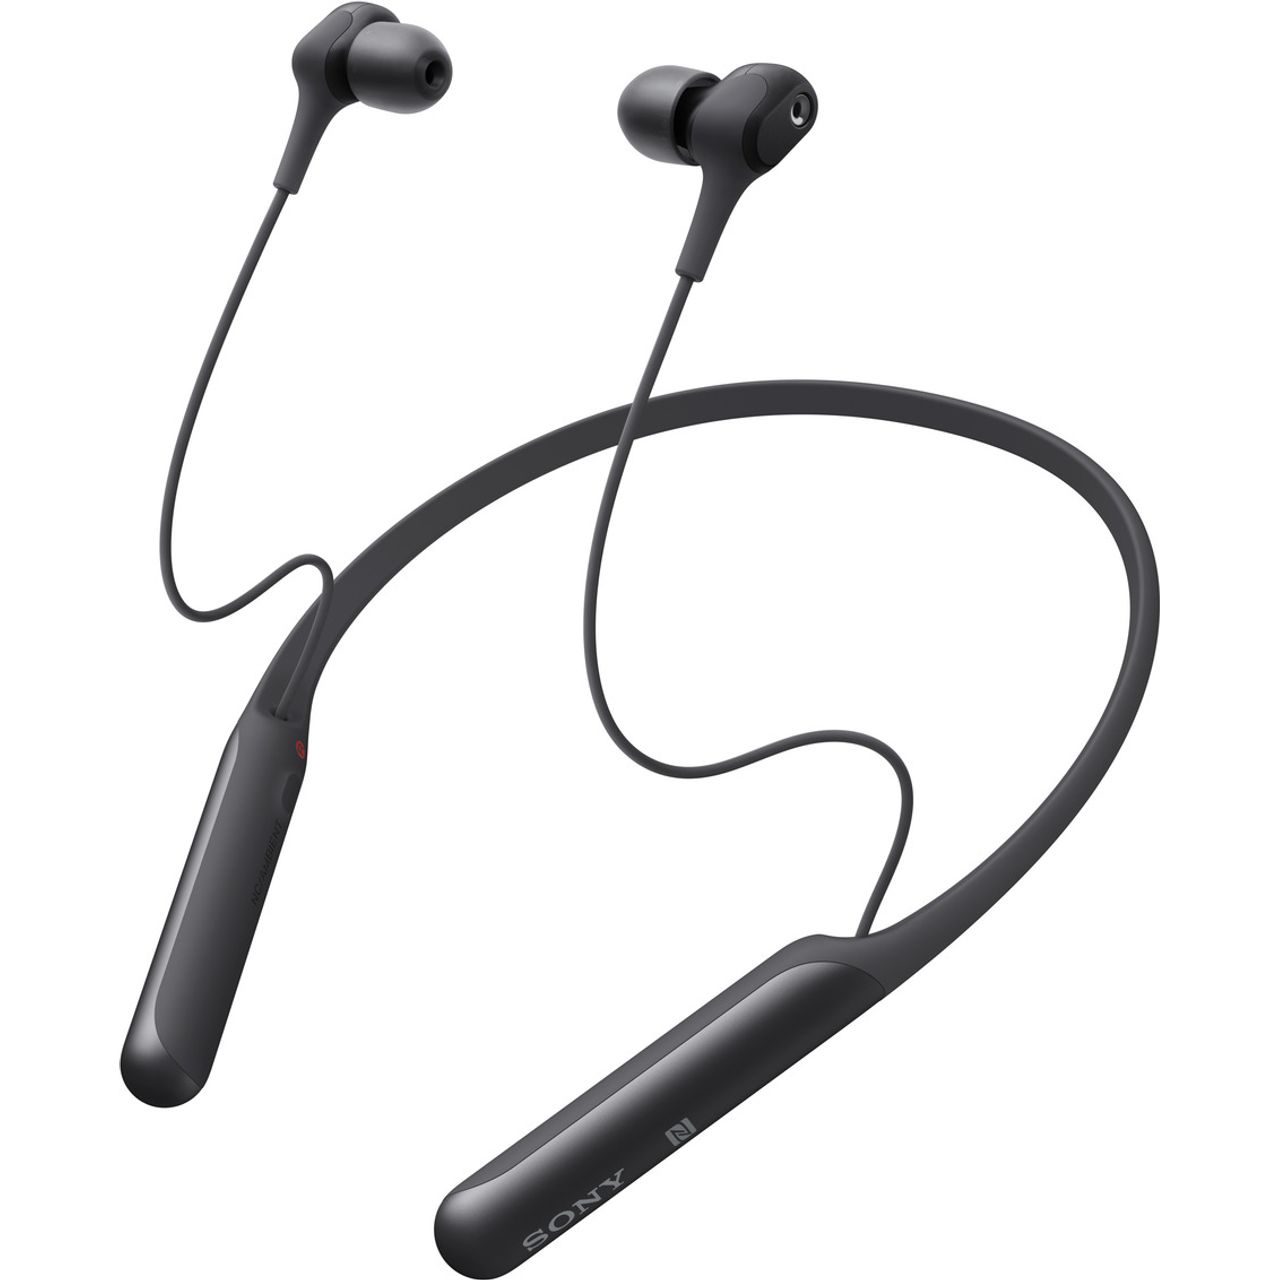 Sony WI-C600N In-Ear Wireless Bluetooth Headphones Review